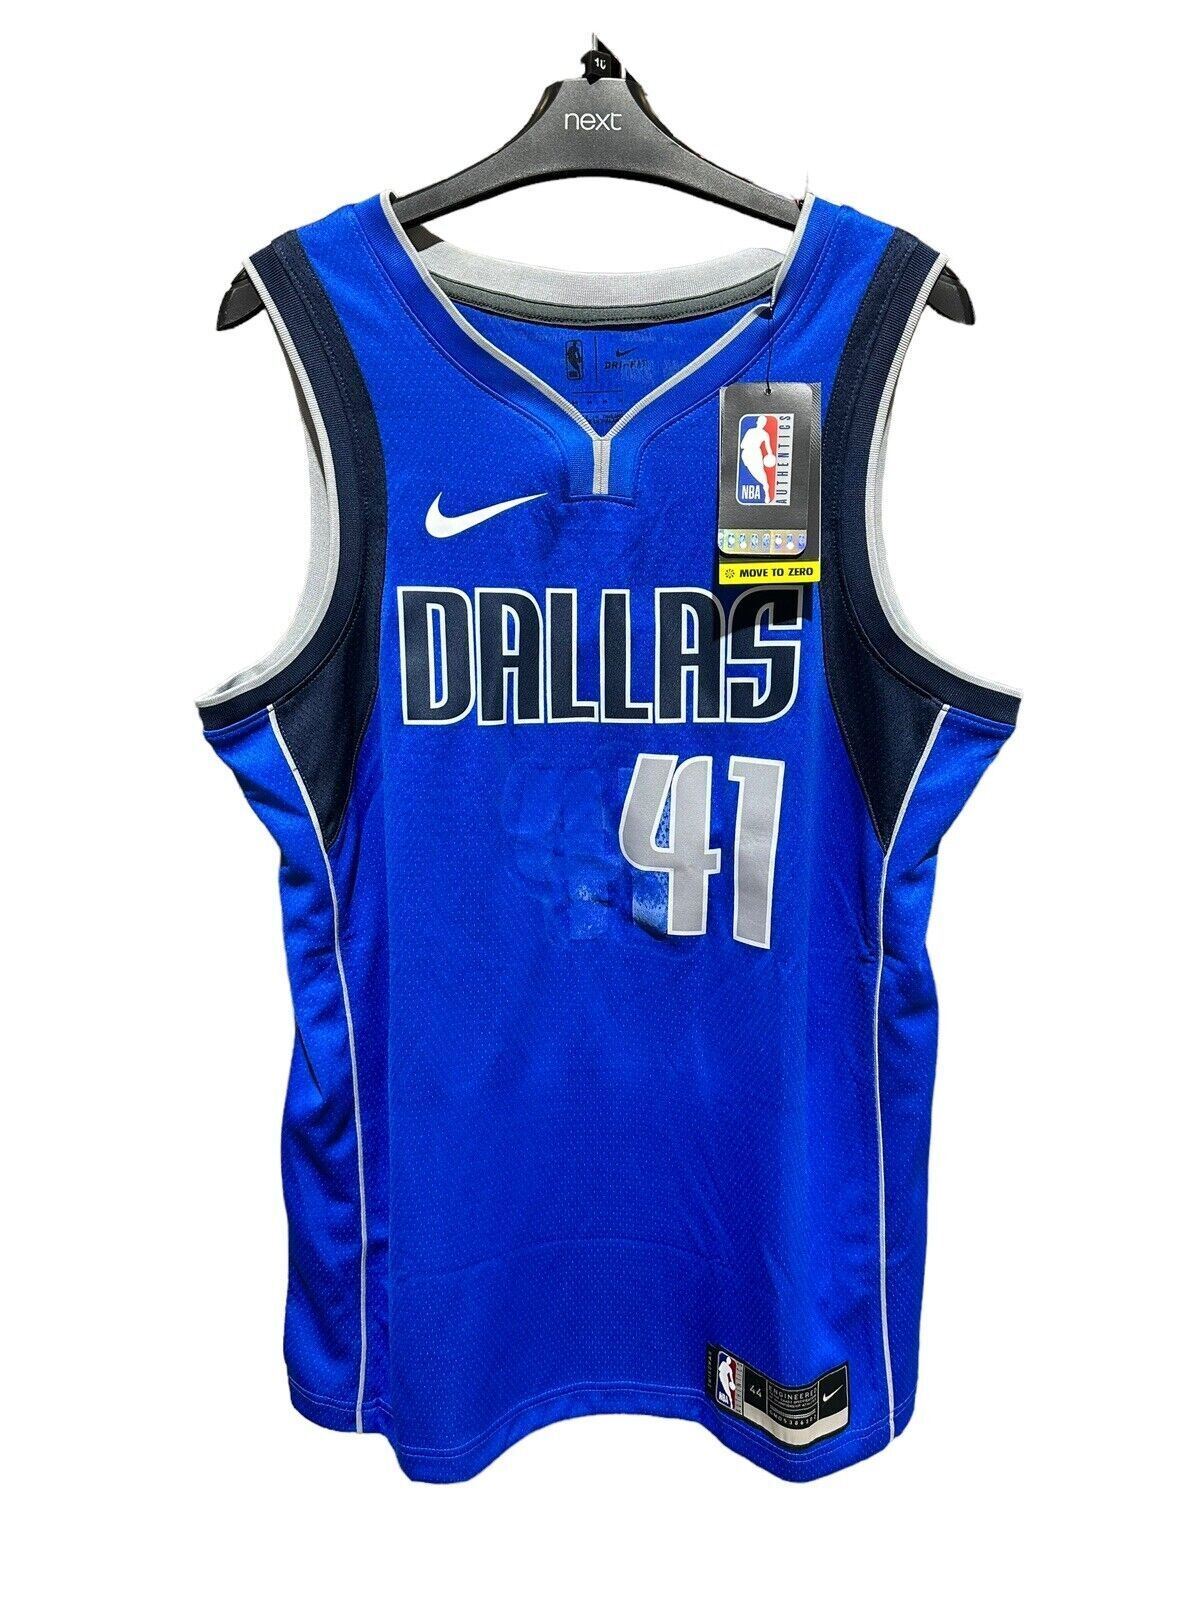 Nike NBA Dallas Mavericks Swingman Edition Jersey ‘41’ Mens Medium *DF*